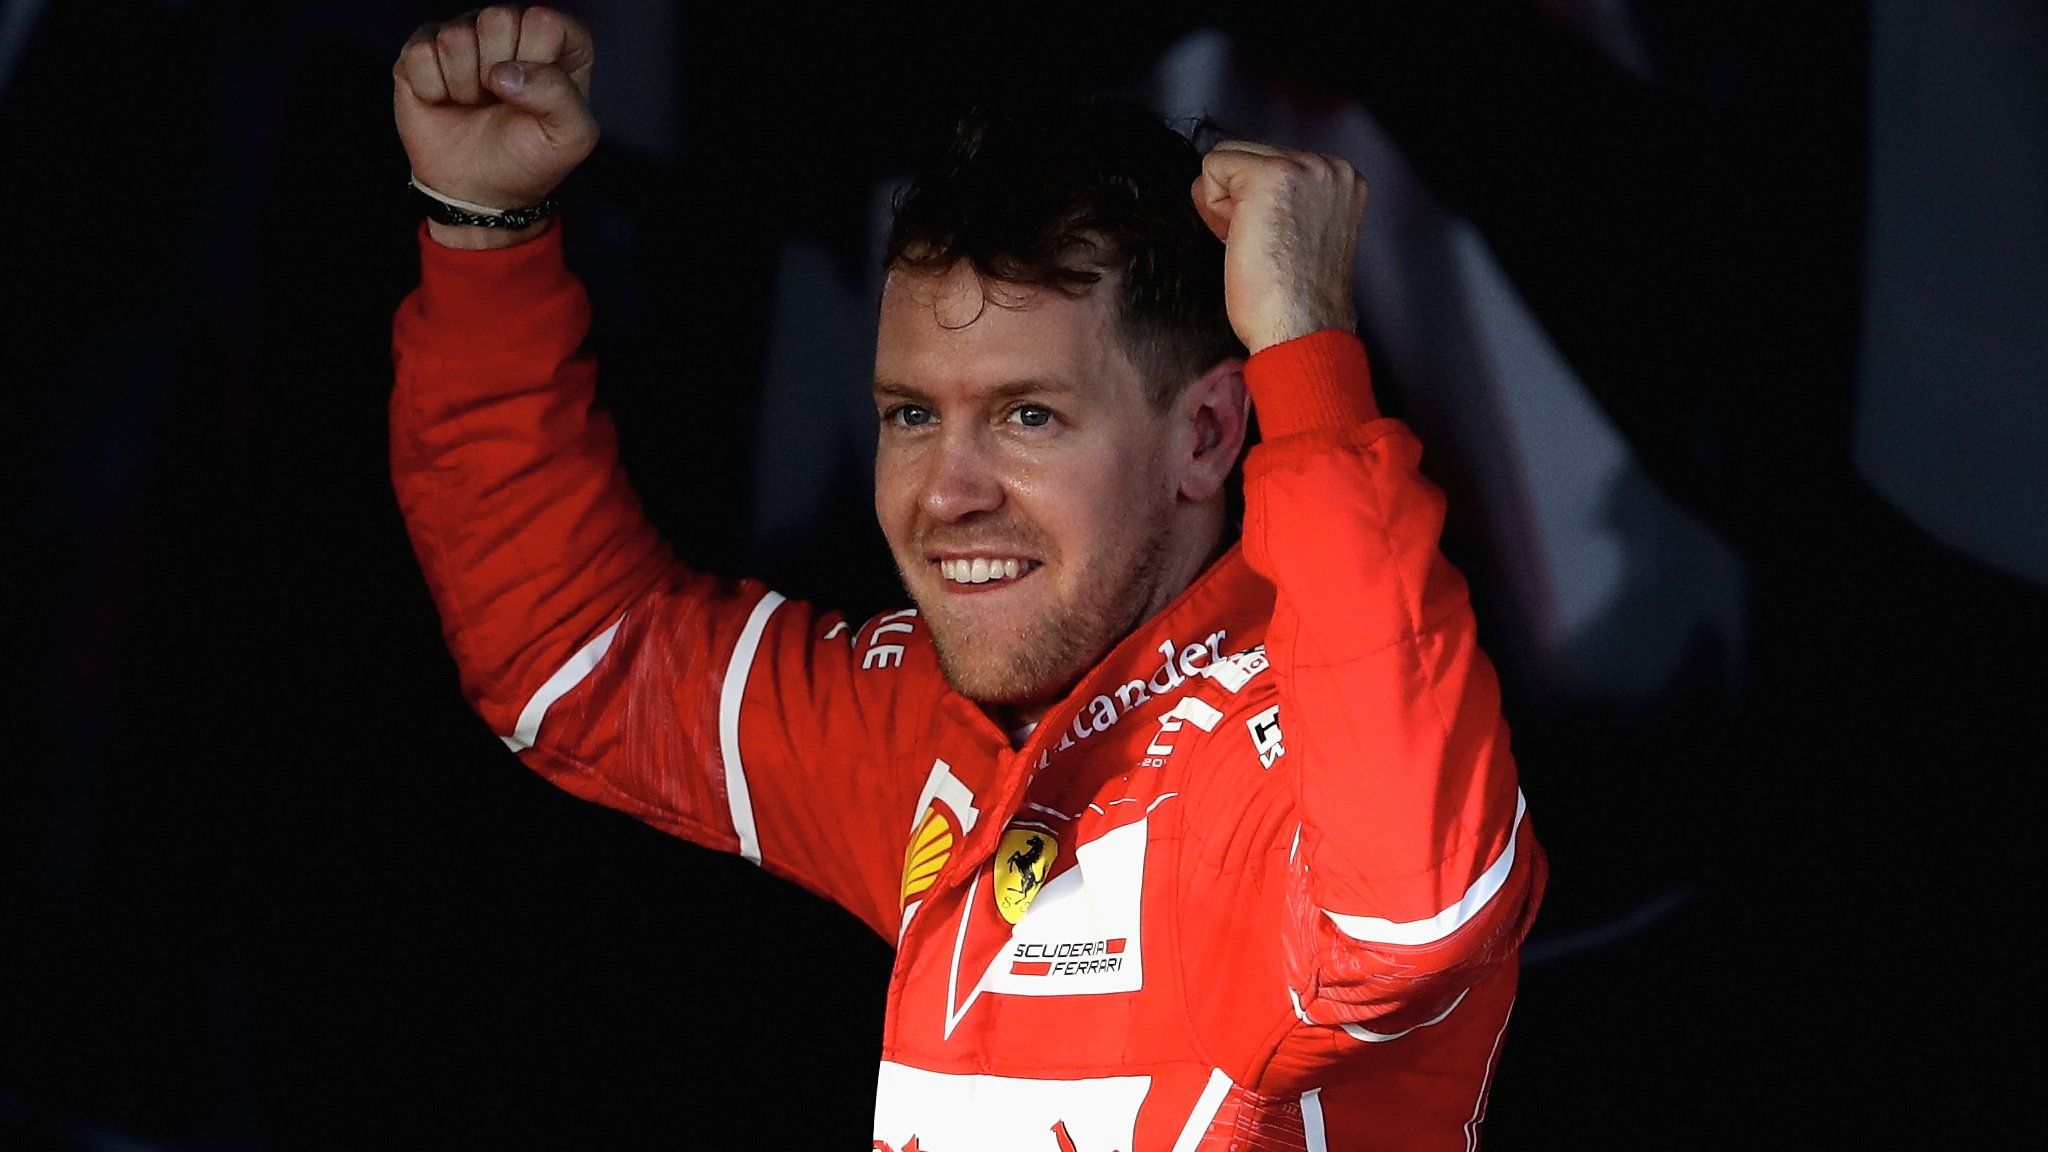 Vettel celebrates